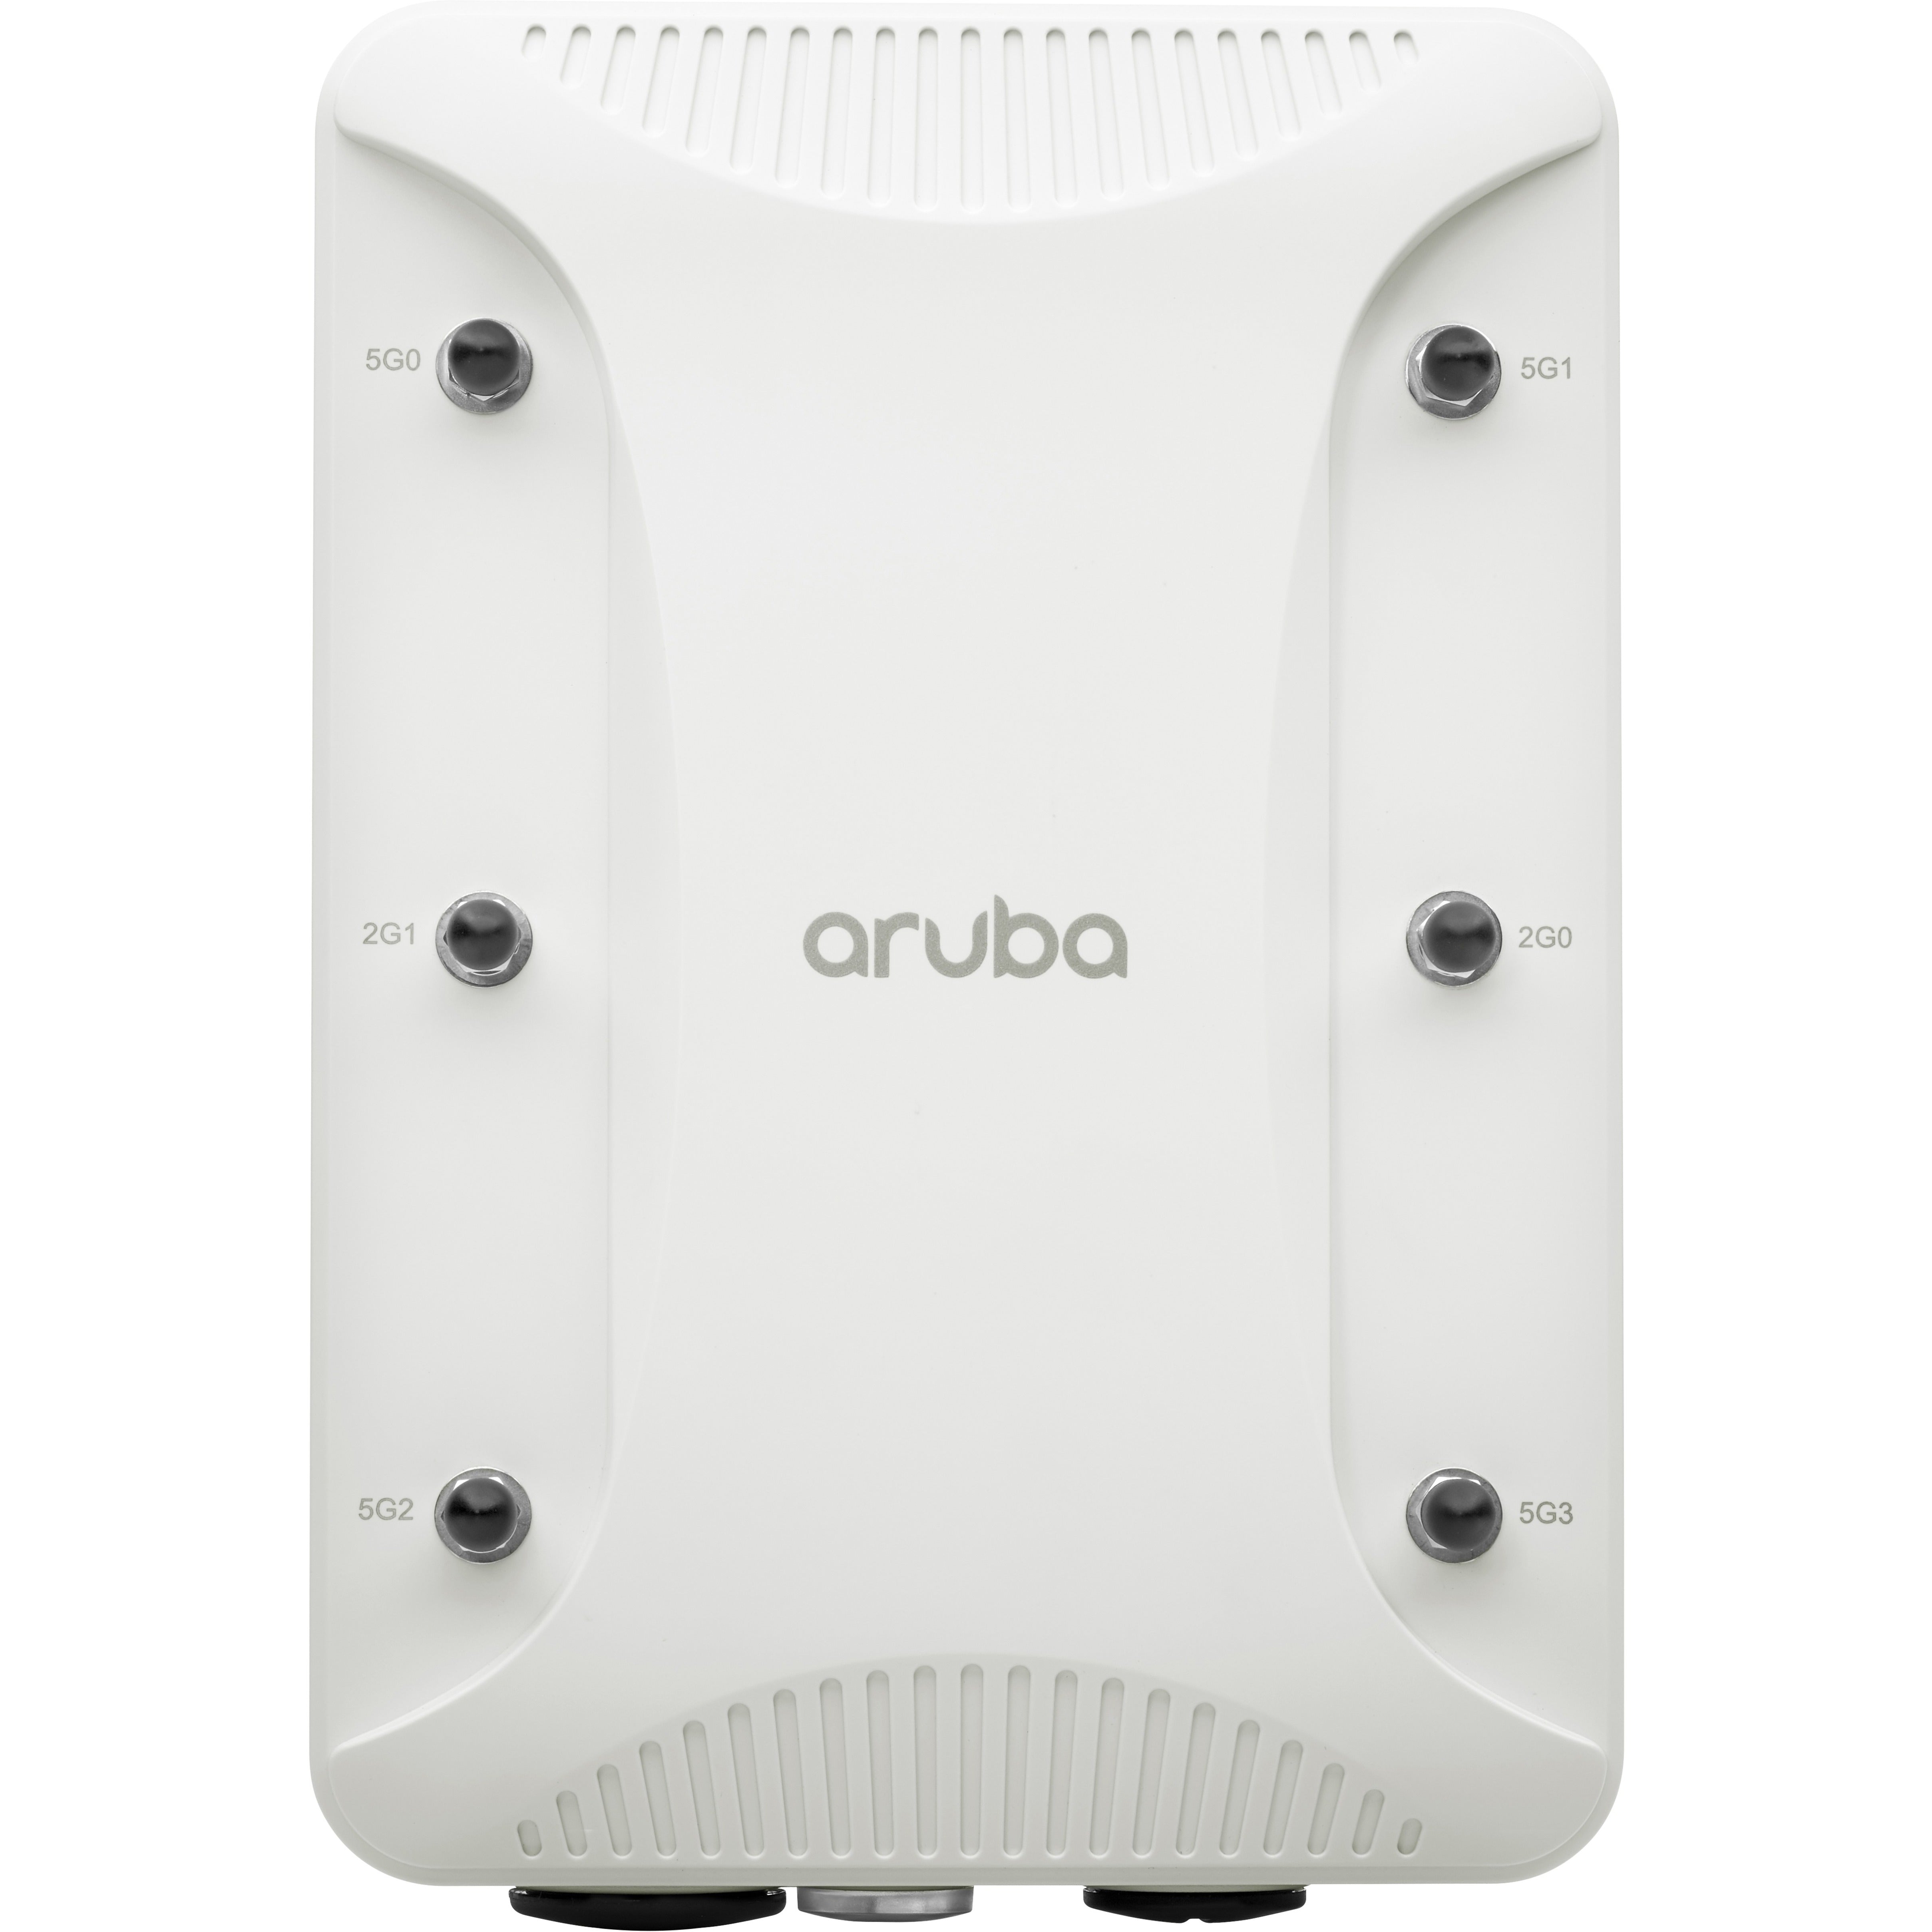 Aruba AP-318 Wireless Access Point - IEEE 802.11ac, 2 Gbit/s [Discontinued]